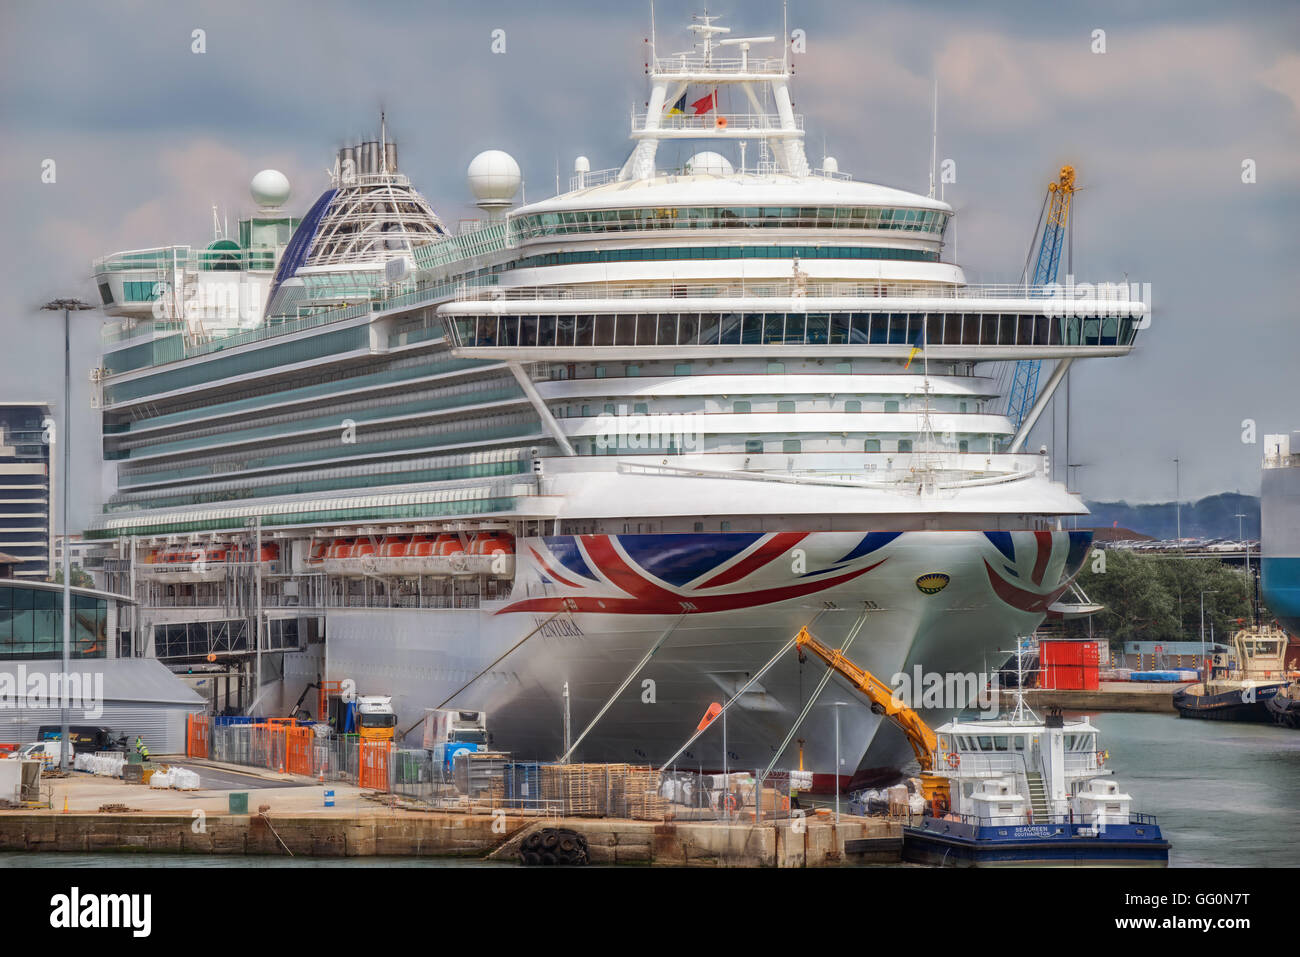 Cruise ship ventura in dock at Southampton prior to a European cruise journey. Stock Photo